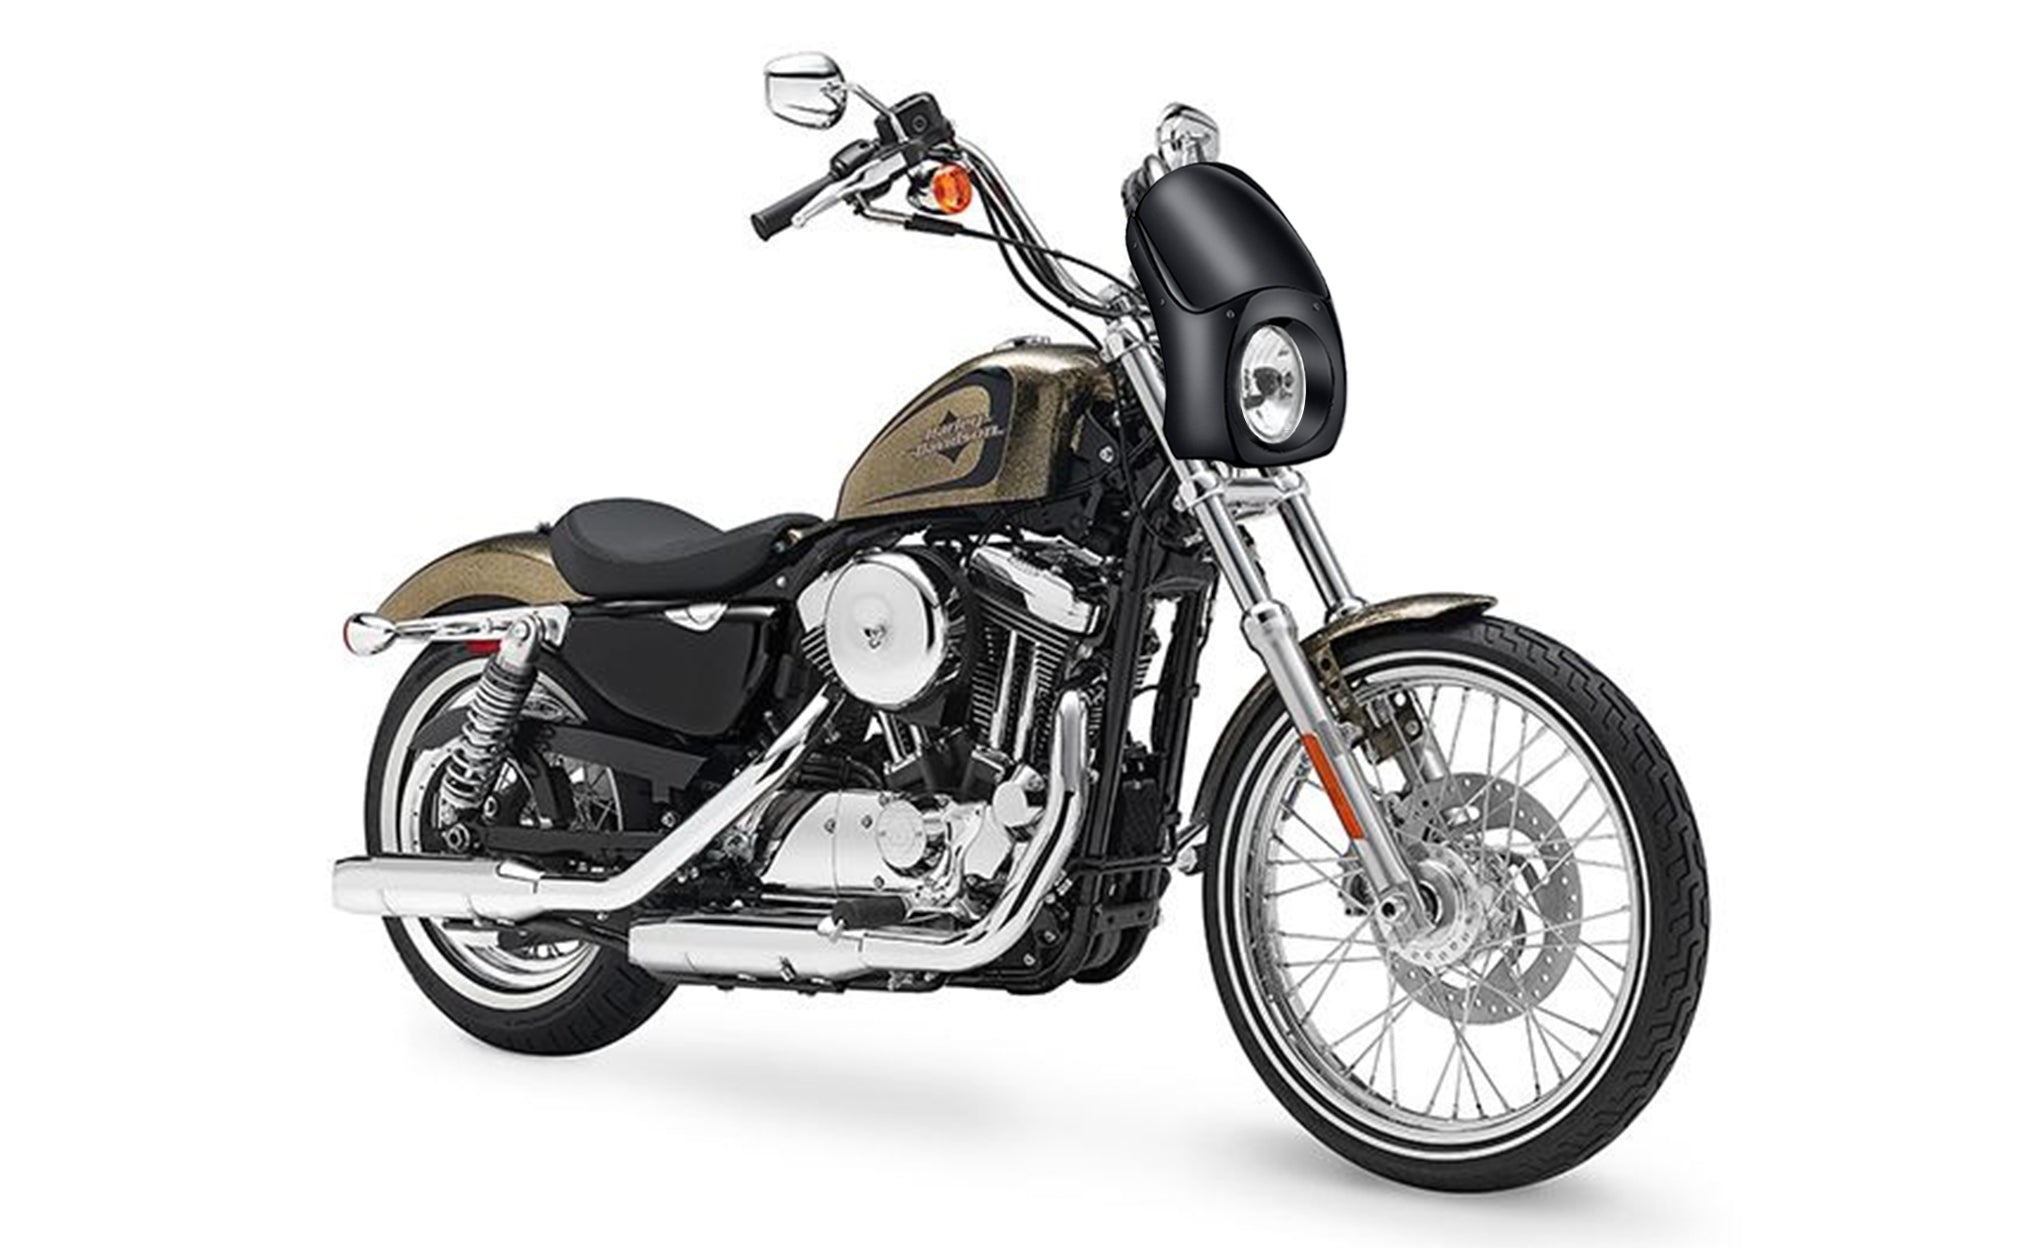 Viking Bronco Motorcycle Fairing For Harley Sportster Seventy Two Gloss Black Bag on Bike View @expand